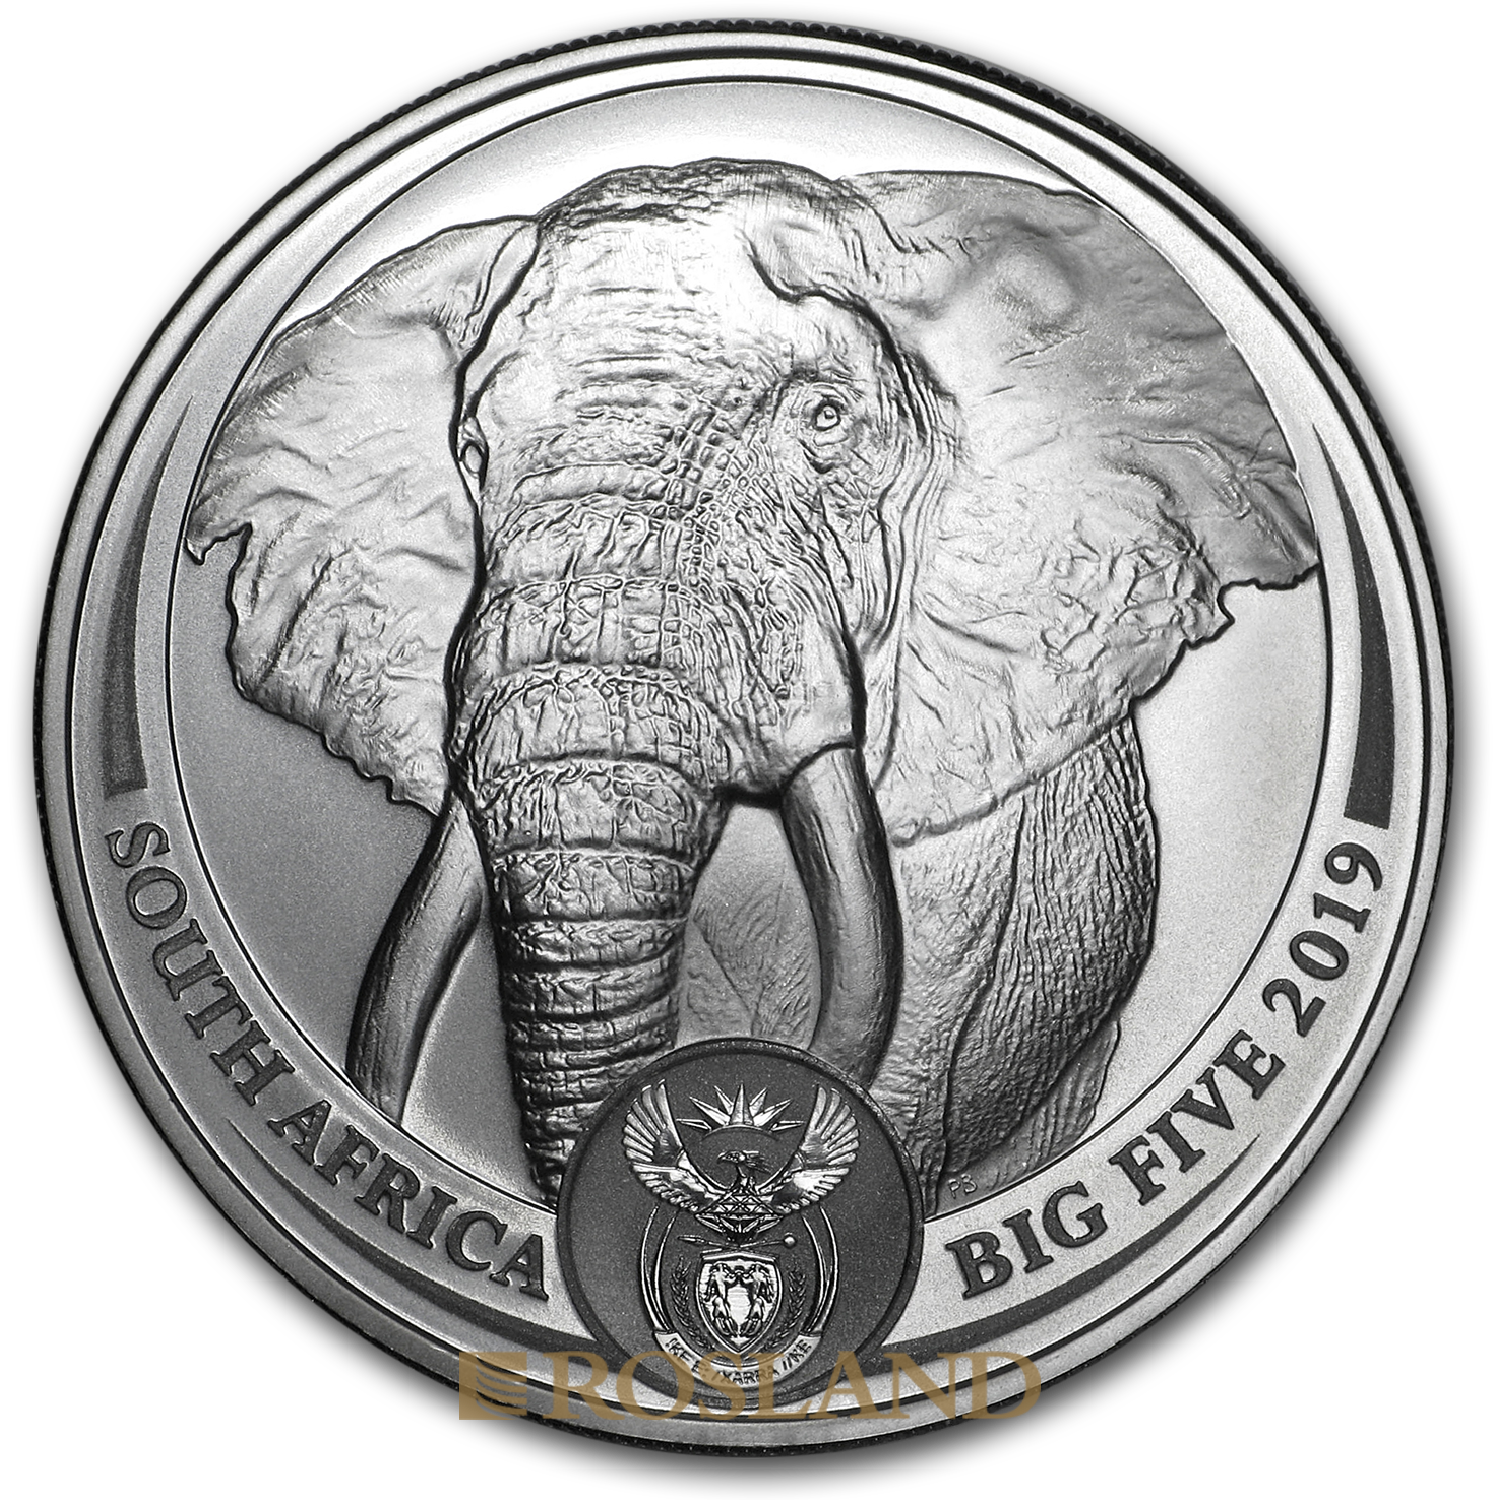 1 Unze Silbermünze Big Five Elefant 2019 (Box, Zertifikat)